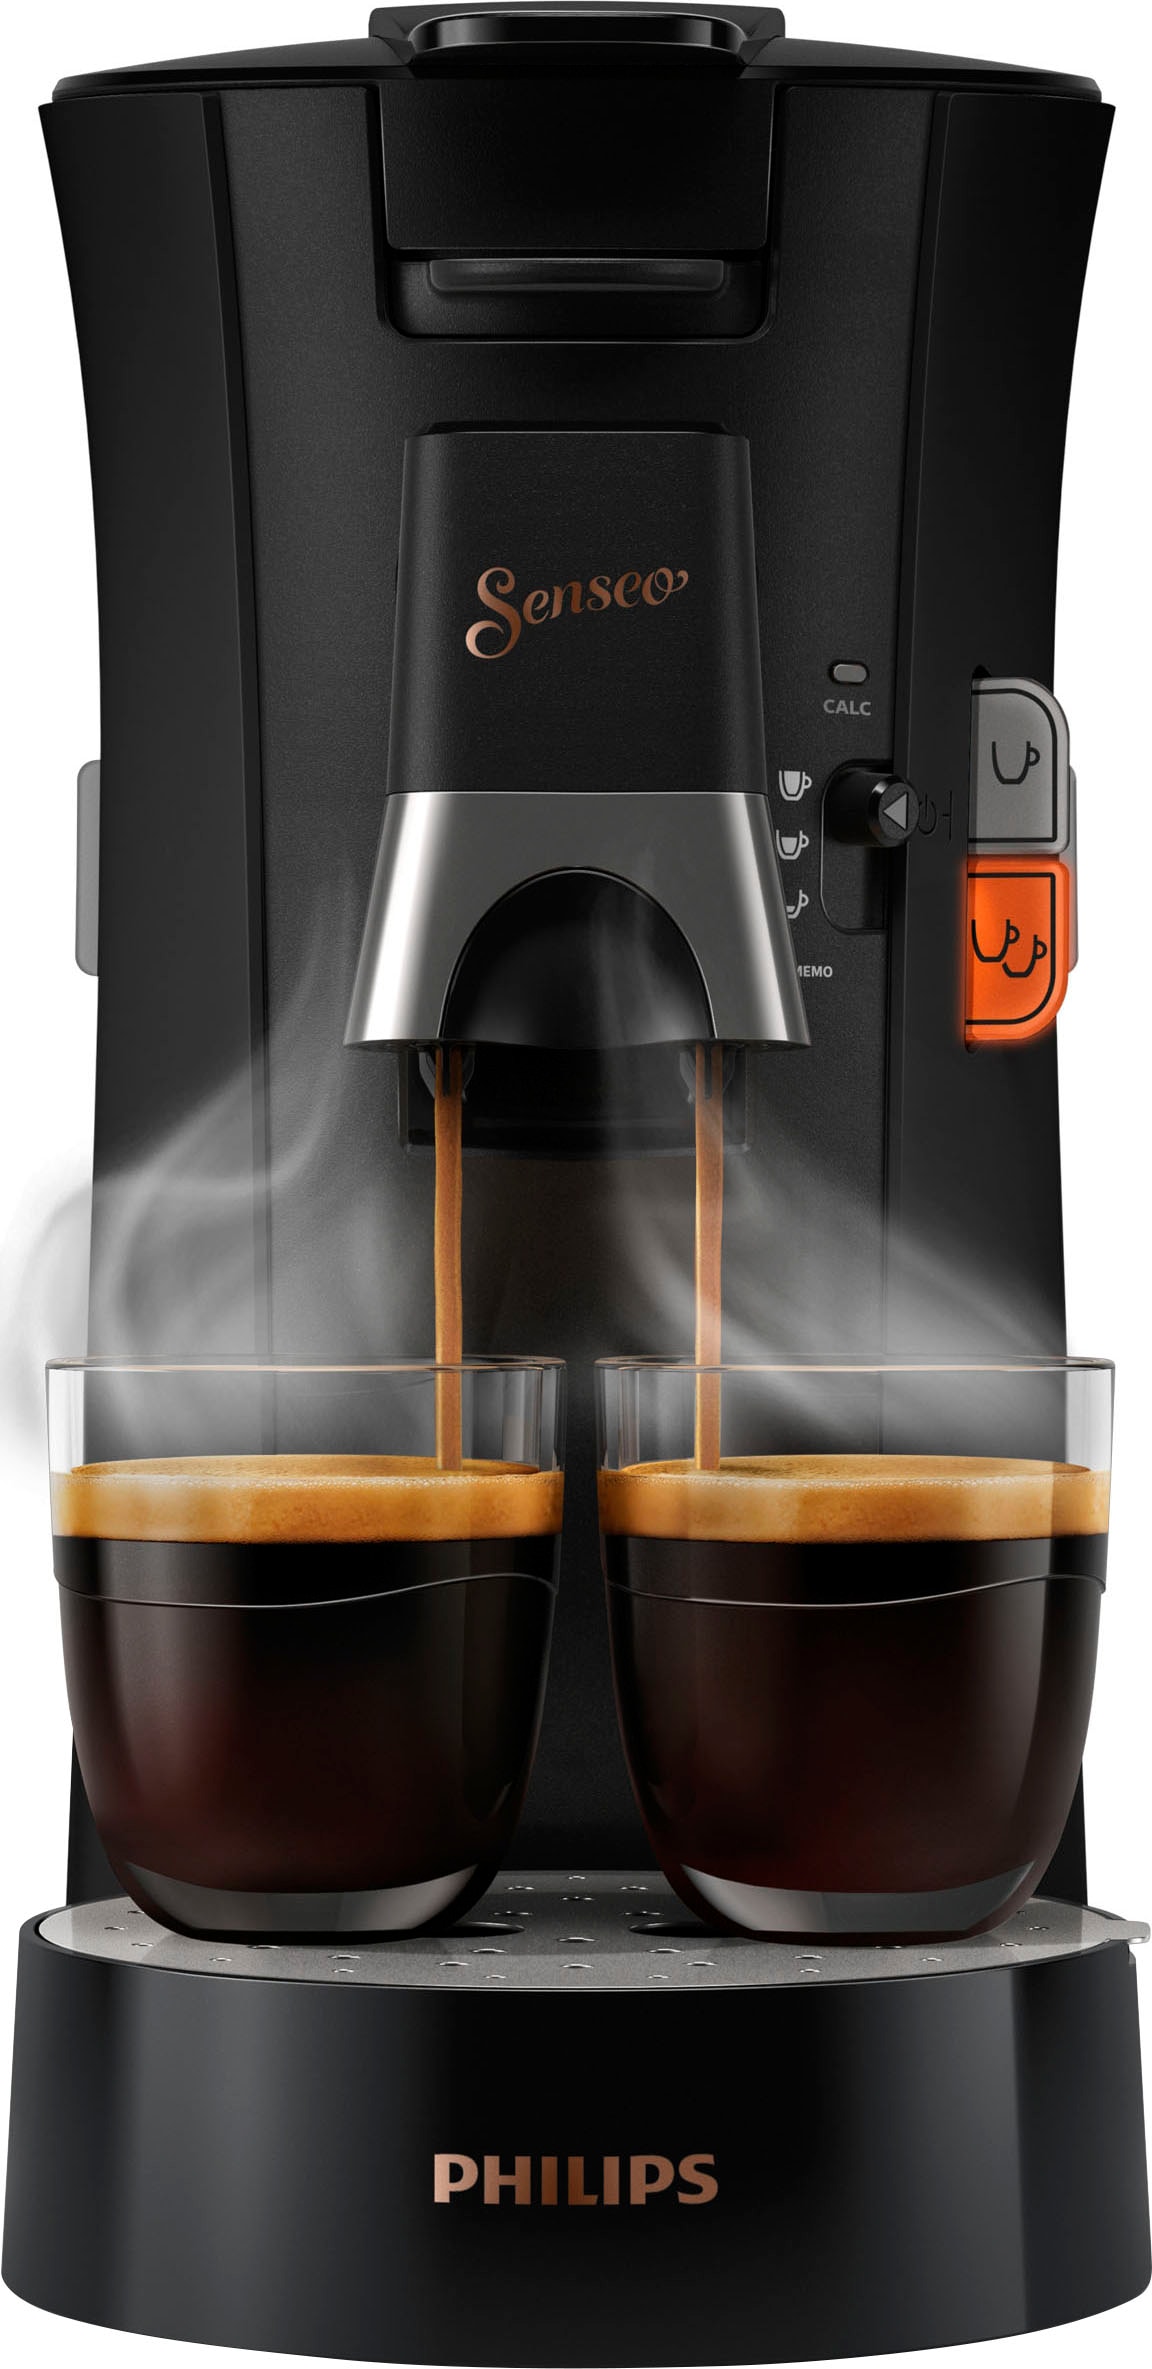 Plastik, metal aus BAUR Kaffeespezialitäten, Philips 21% »Select 3 recyceltem schwarz mit Senseo CSA240/60«, | Kaffeepadmaschine